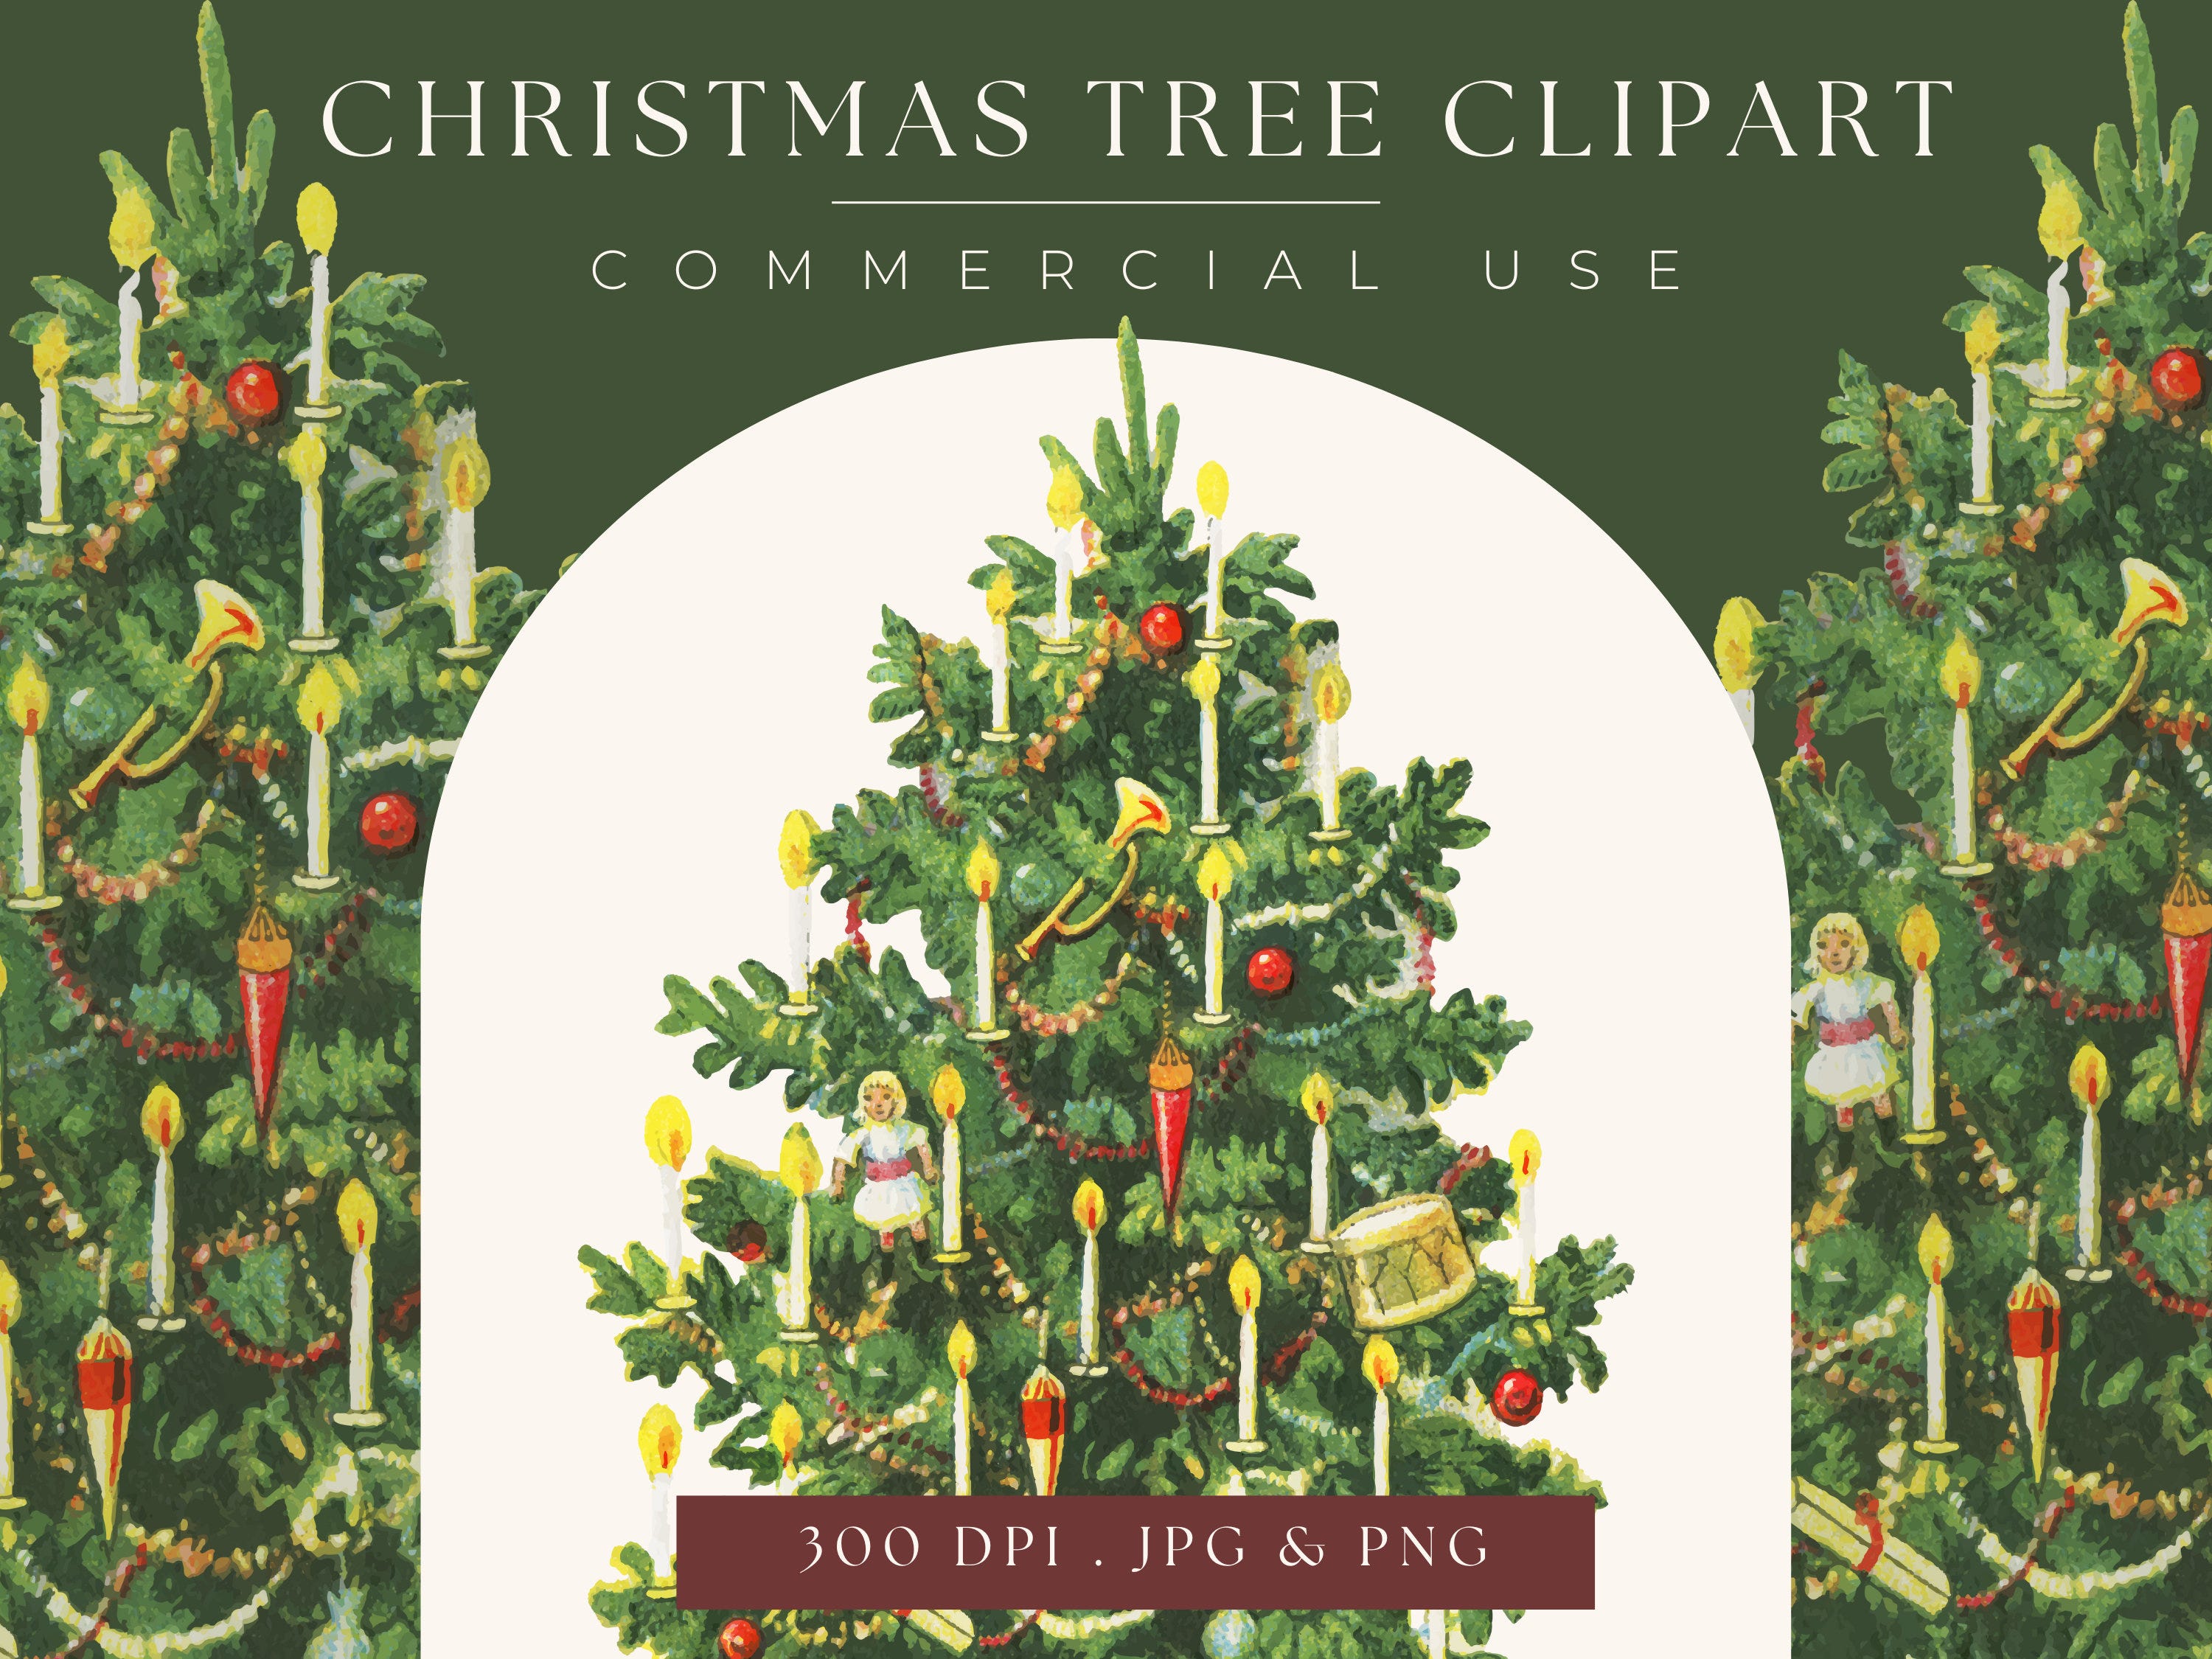 Christmas Tree Clipart image, Christmas graphic, Digital Download, Digital print, clip art, scrapbooking, home decor, xmas, holiday, vintage